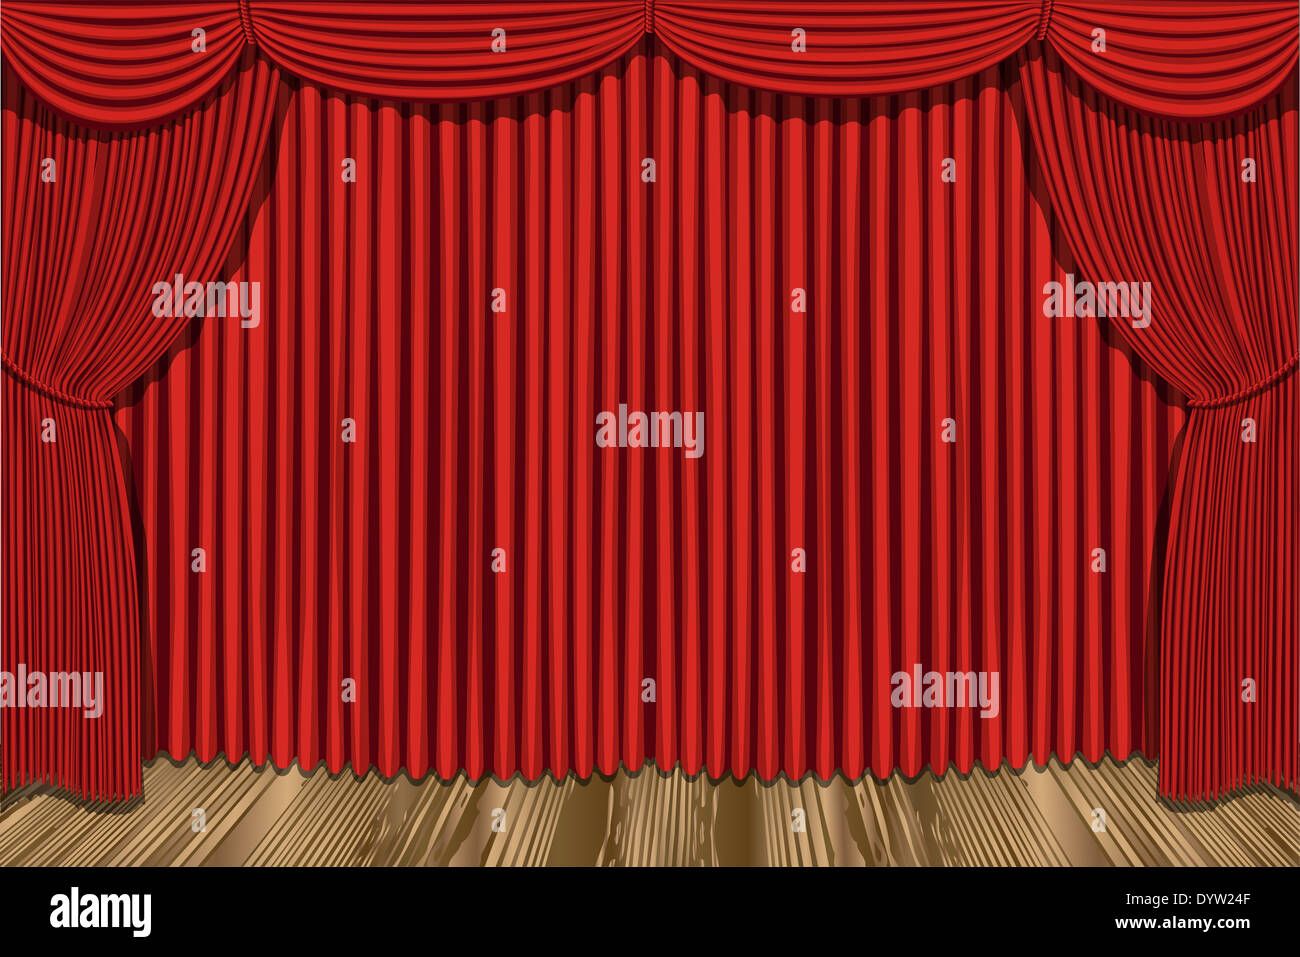 Rred drapes curtain. gradient mash. Vector illustration Stock Photo